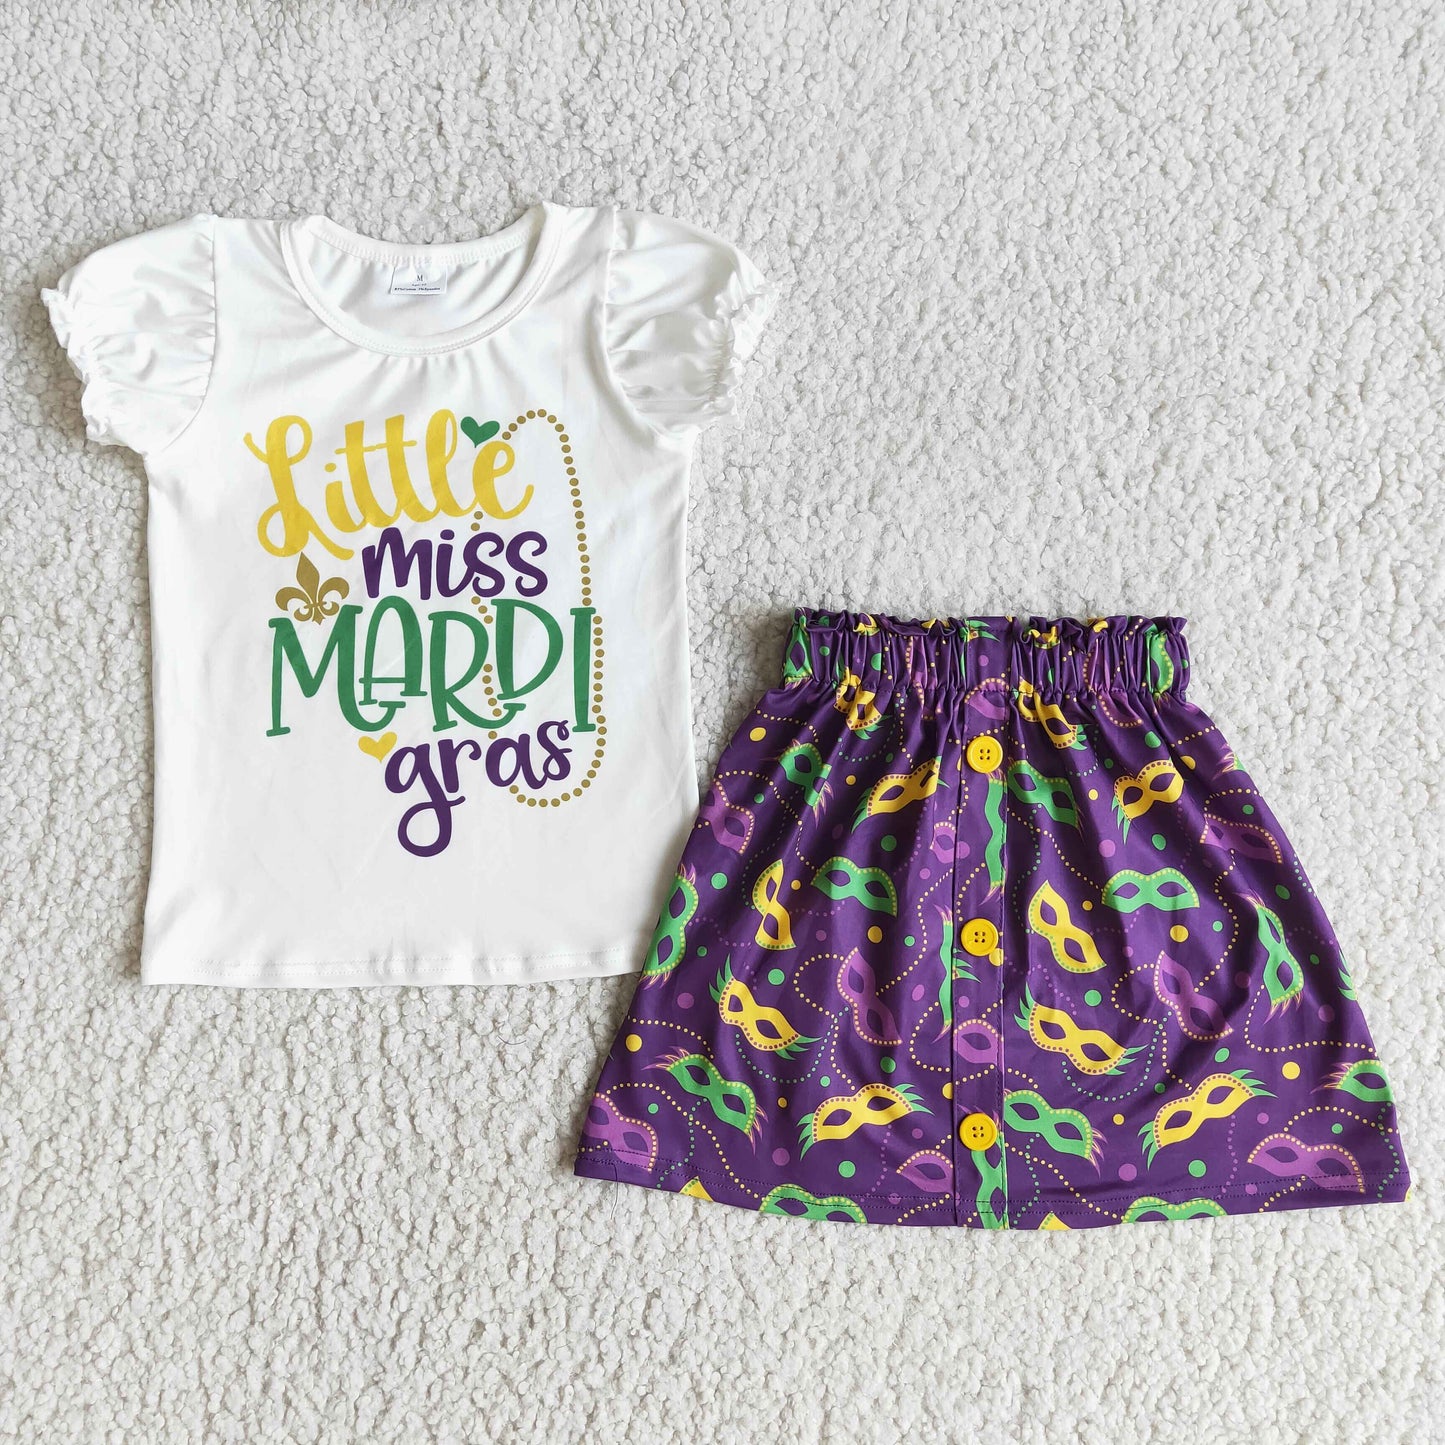 Little miss mardi gras shirt skirt baby girls clothing set